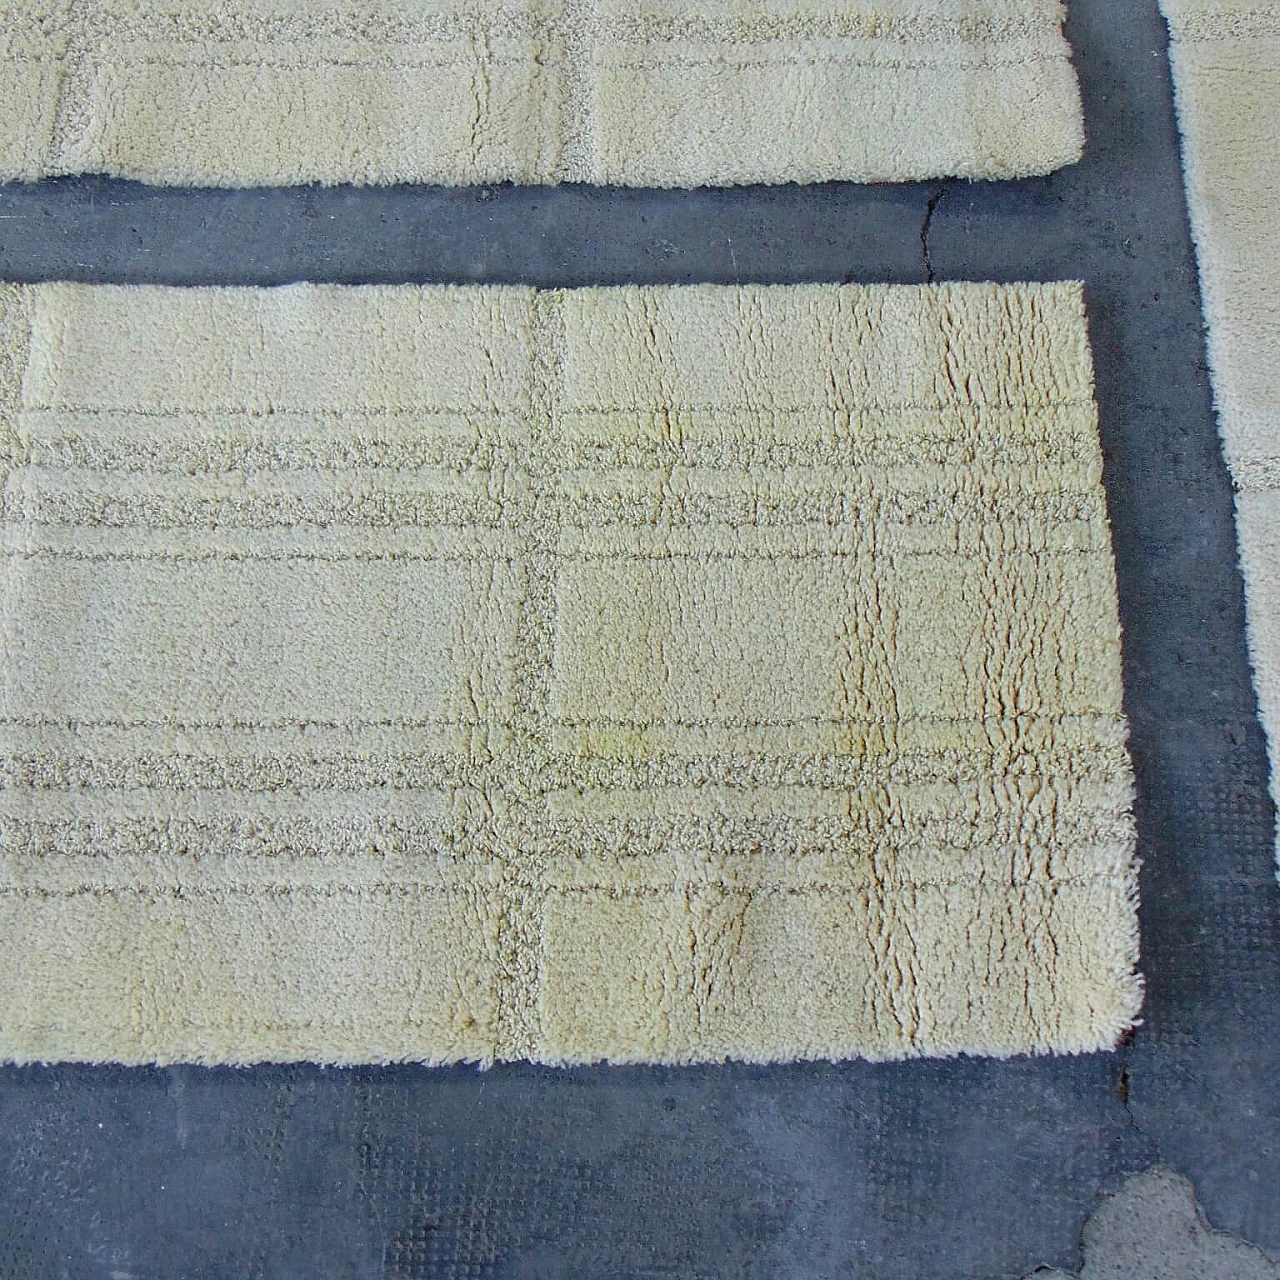 3 Tappeti danesi in pura lana vergine, tonalità crema, Eksport Hojer, anni '70 1069205